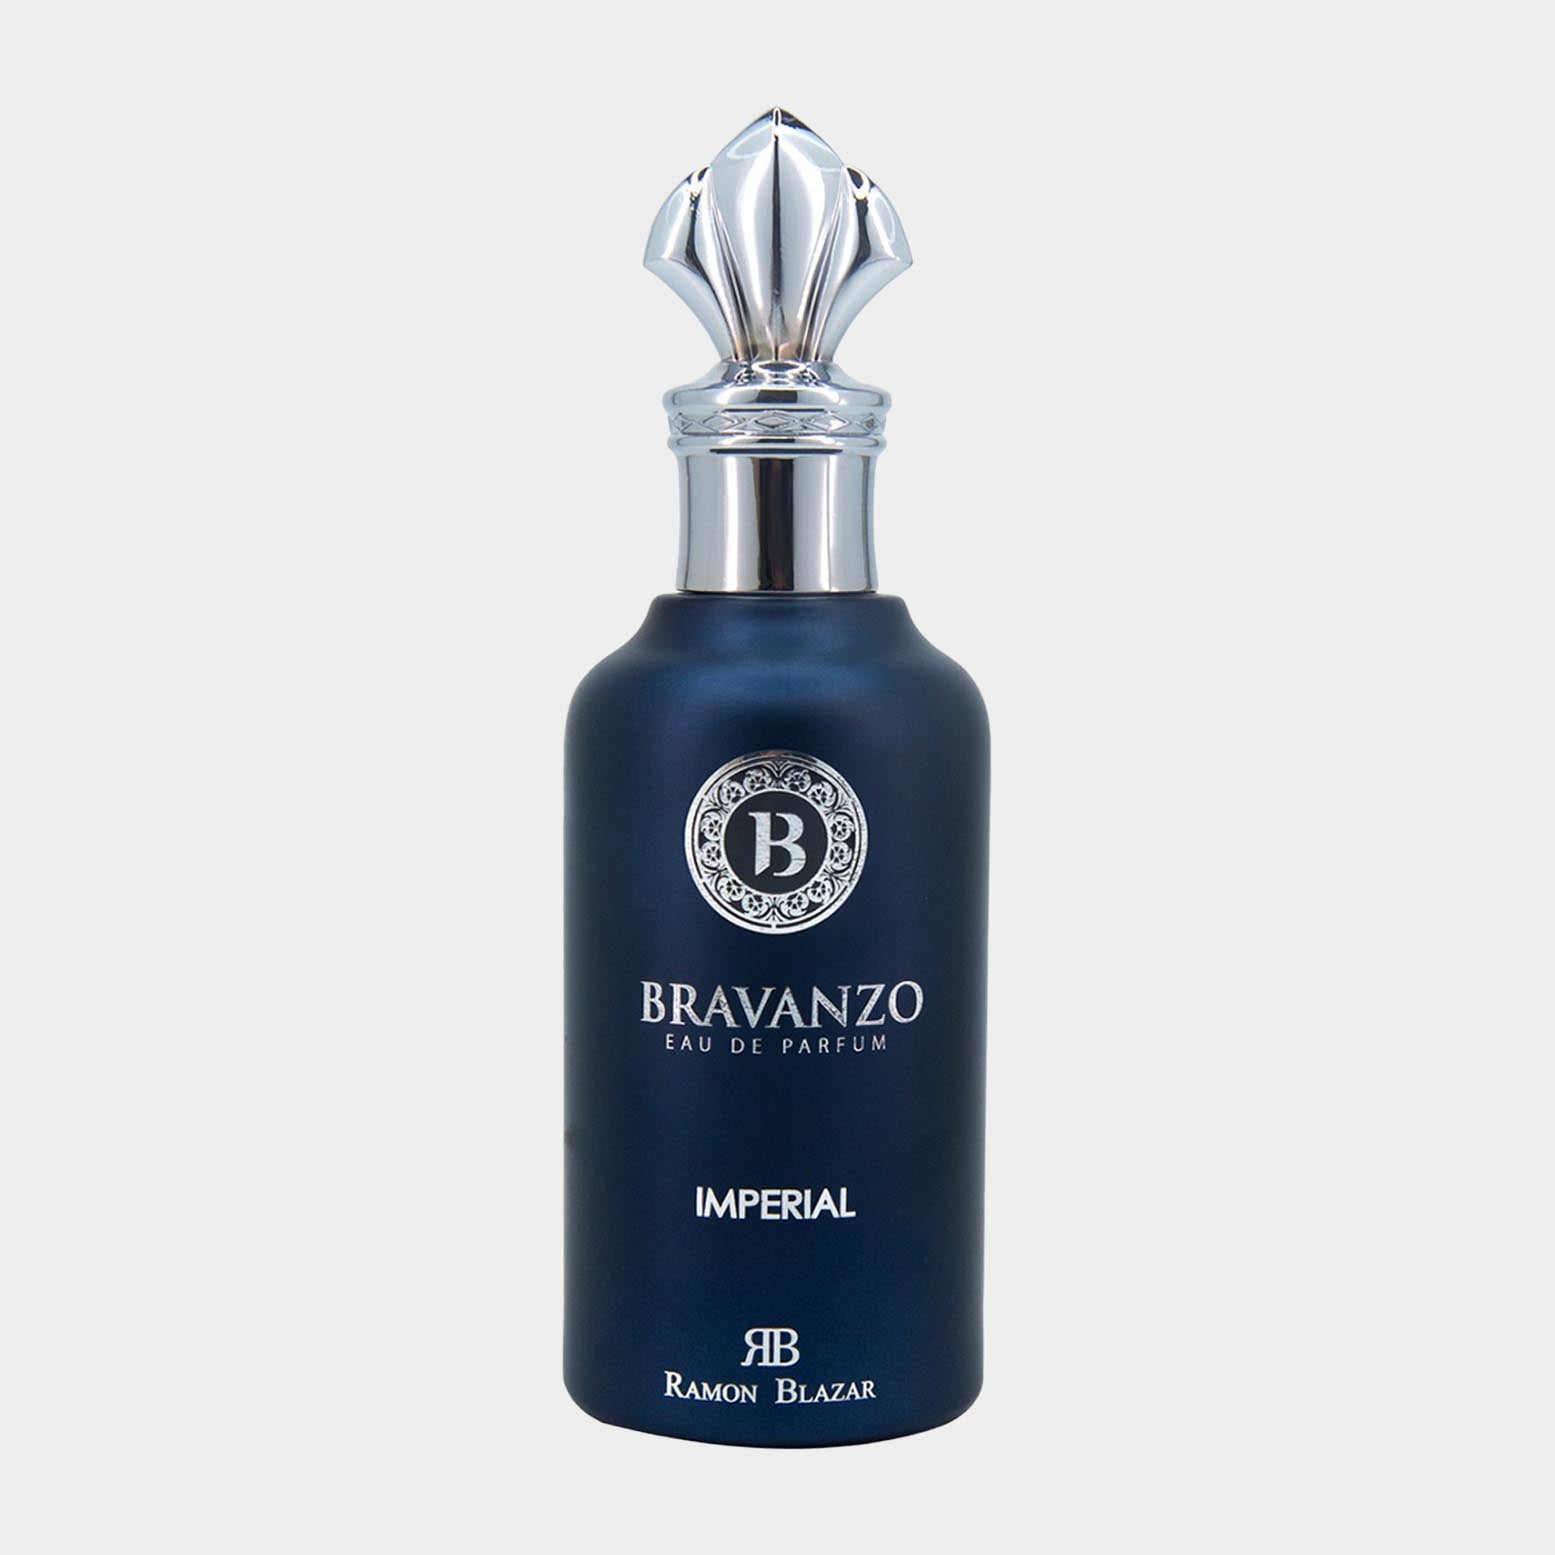 De parfum Bravanzo Imperial.